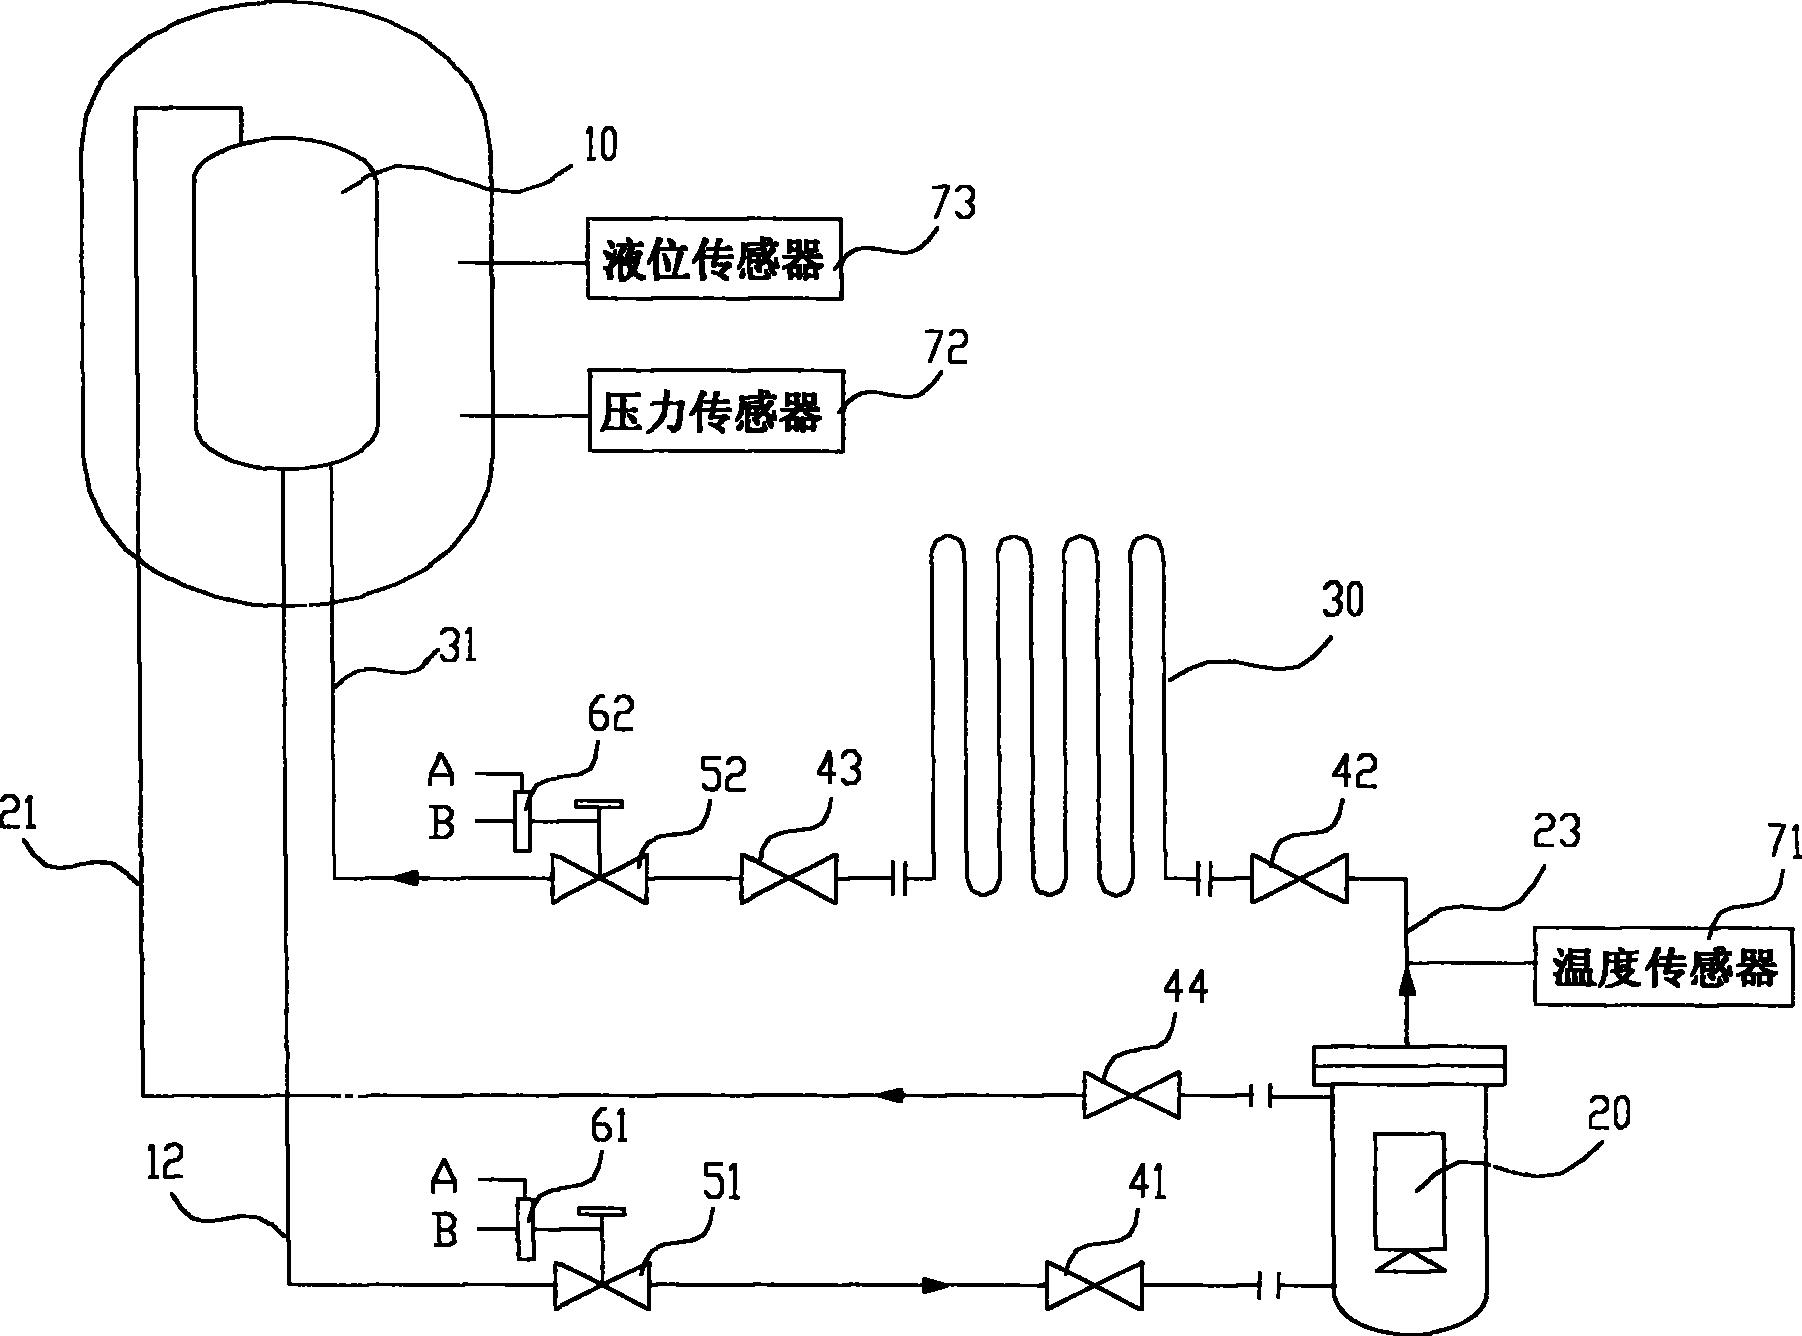 LNG pressure regulating system and pressure regulating method thereof